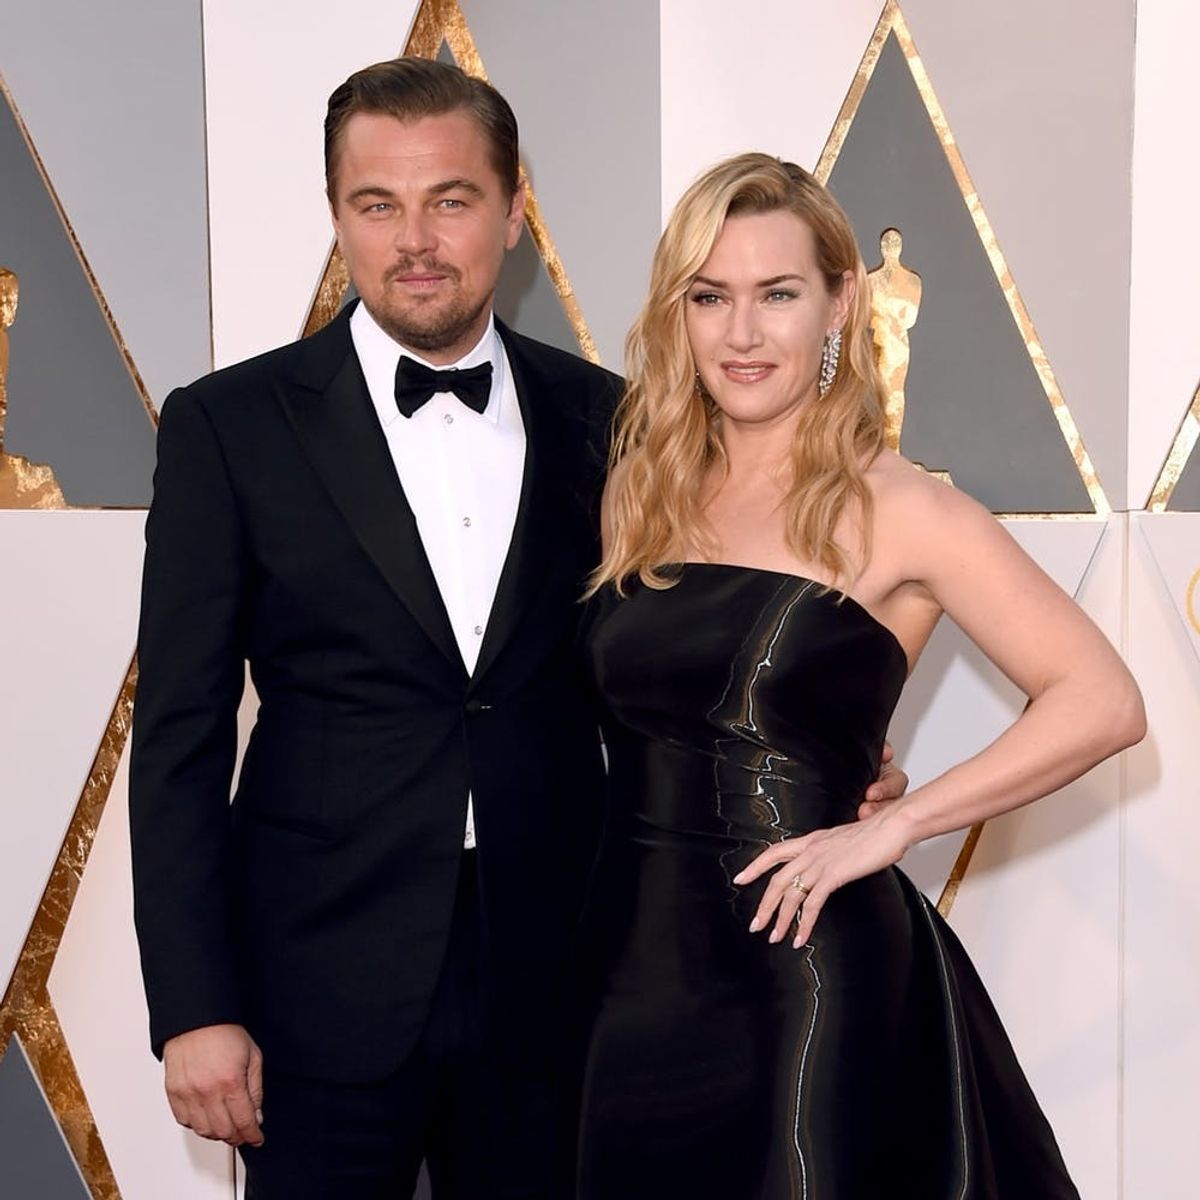 Kate Winslet Breaks “Titanic” Fans’ Hearts By Admitting She “Never Fancied” Leonardo DiCaprio